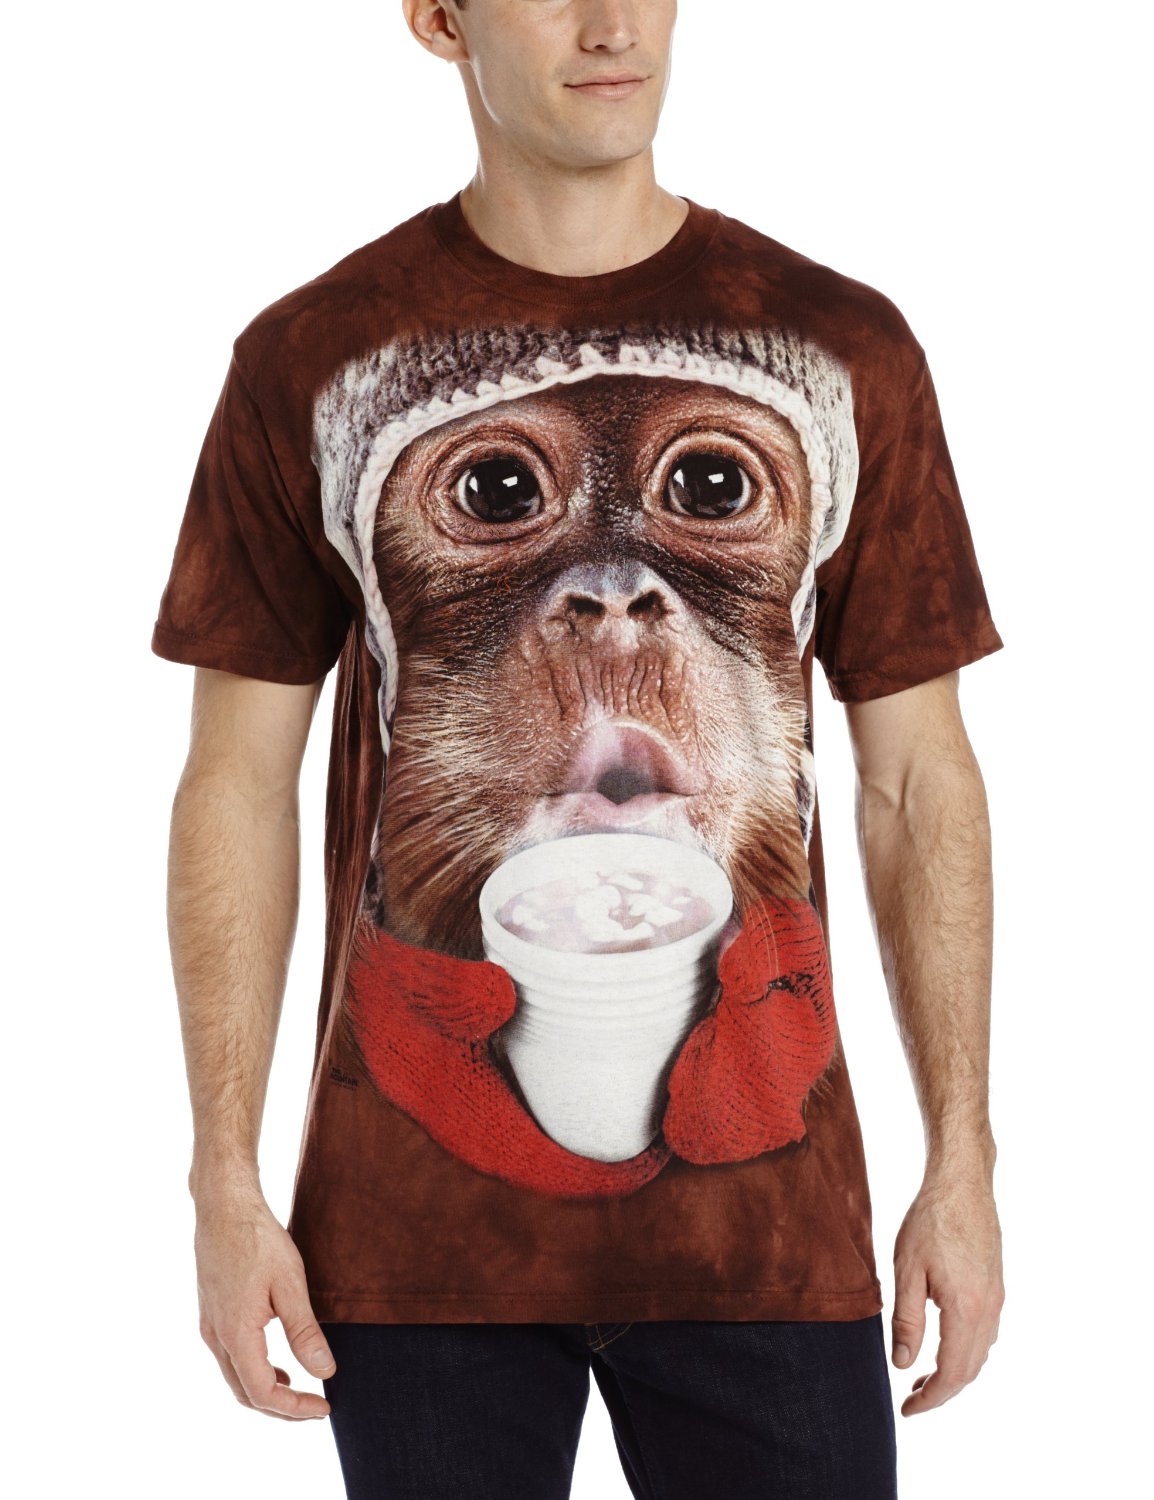 Hot Cocoa Orangutan Christmas Holiday The Mountain Men's T-Shirt